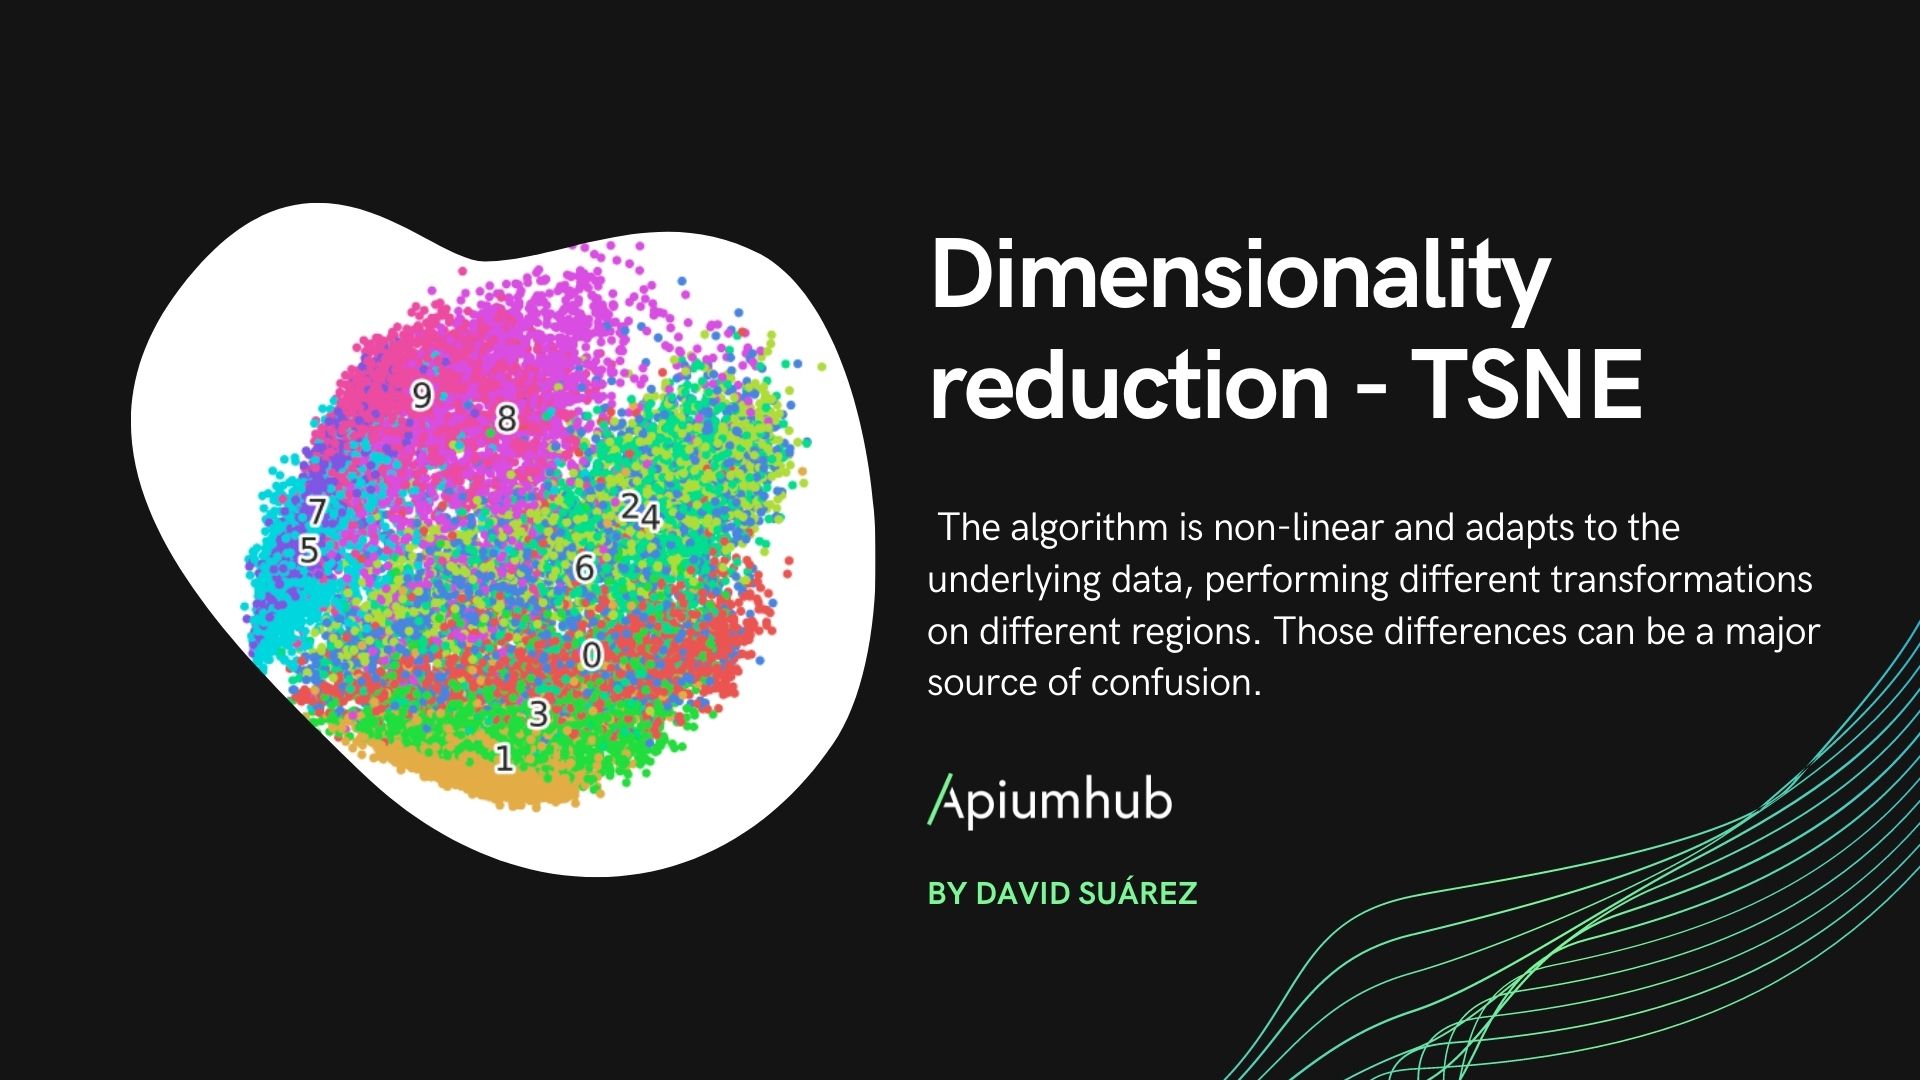 Dimensionality reduction - TSNE